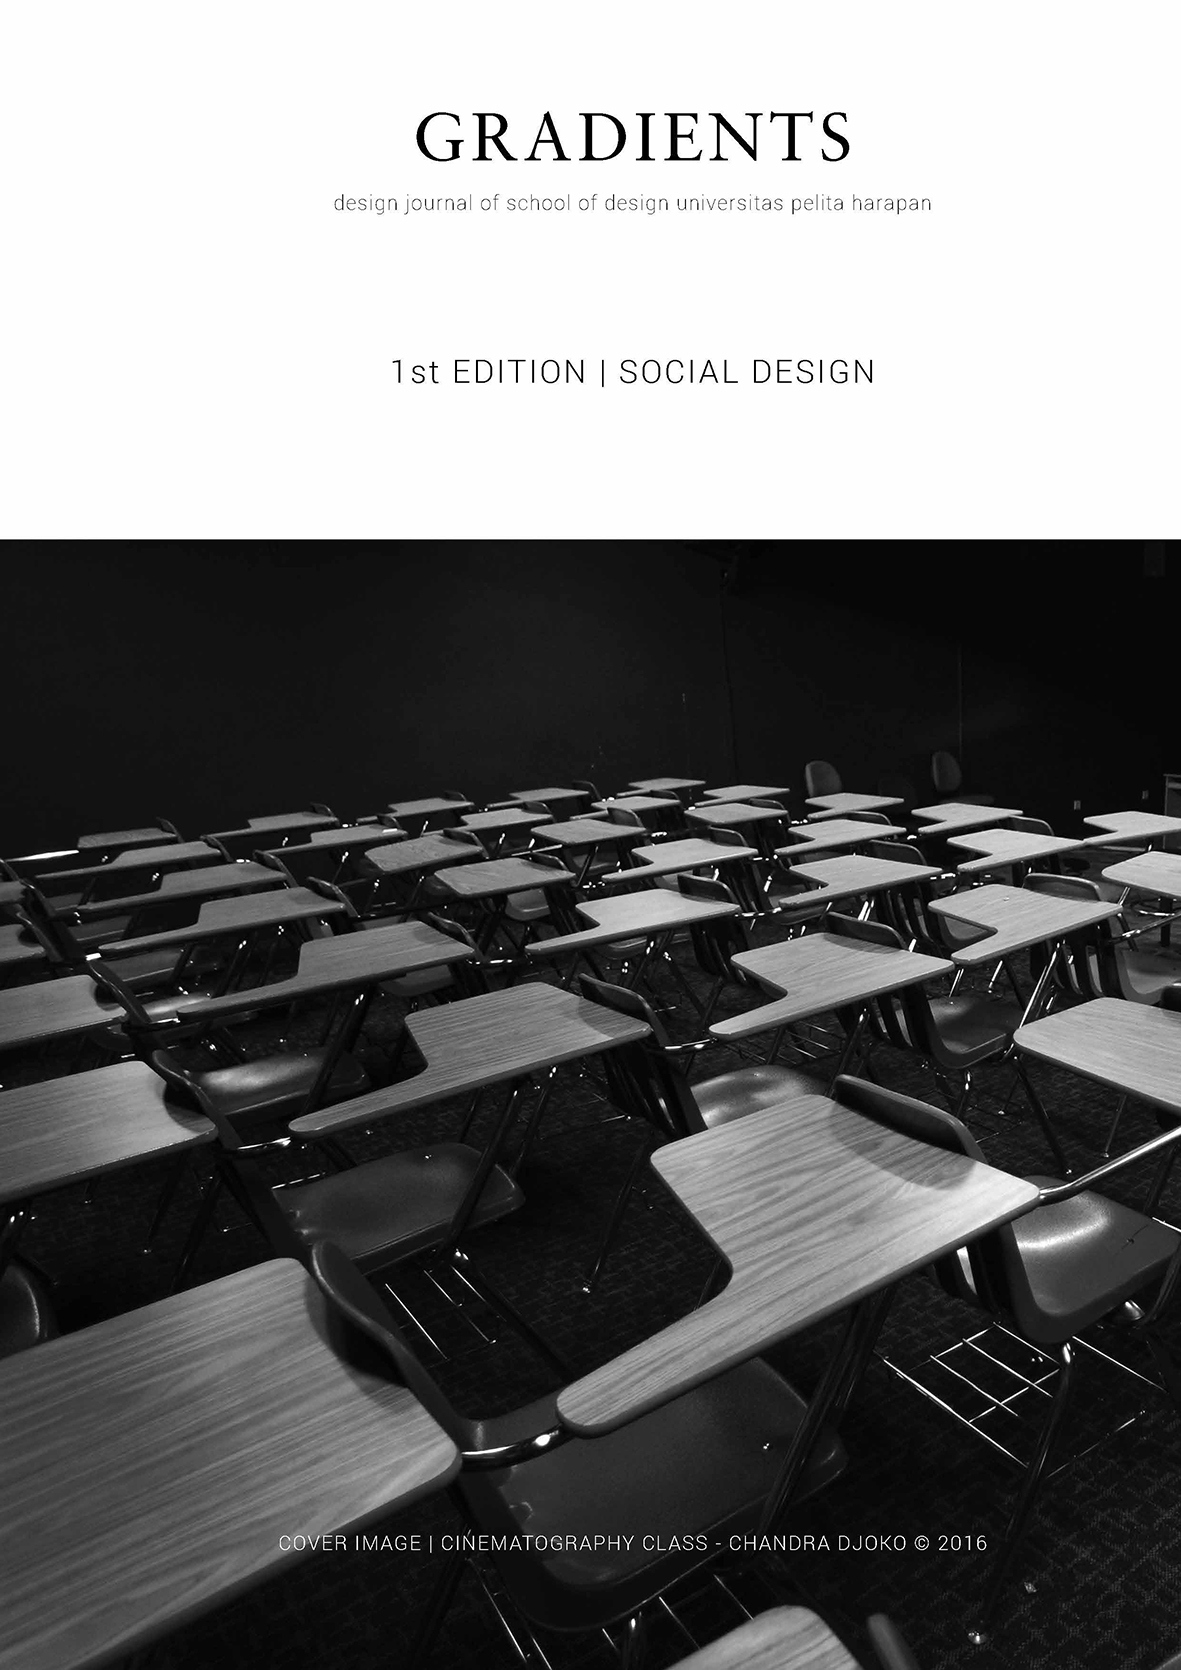 gradients: design journal of school of design universitas pelita harapan